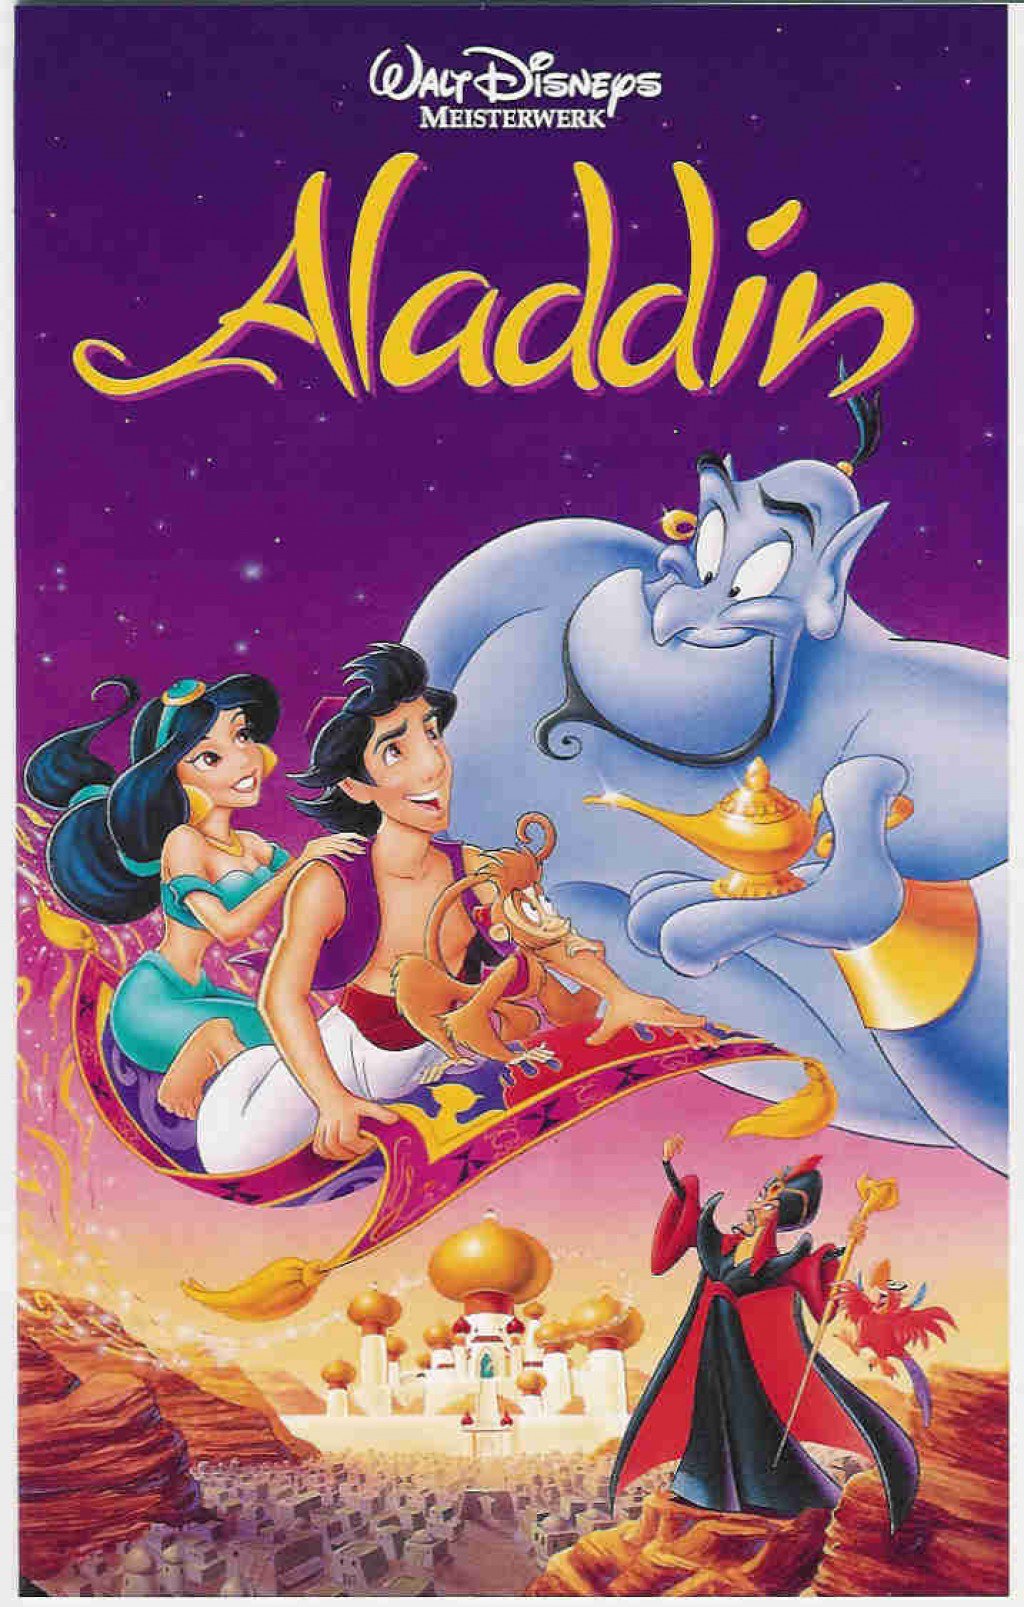 Disney's Aladdin #20